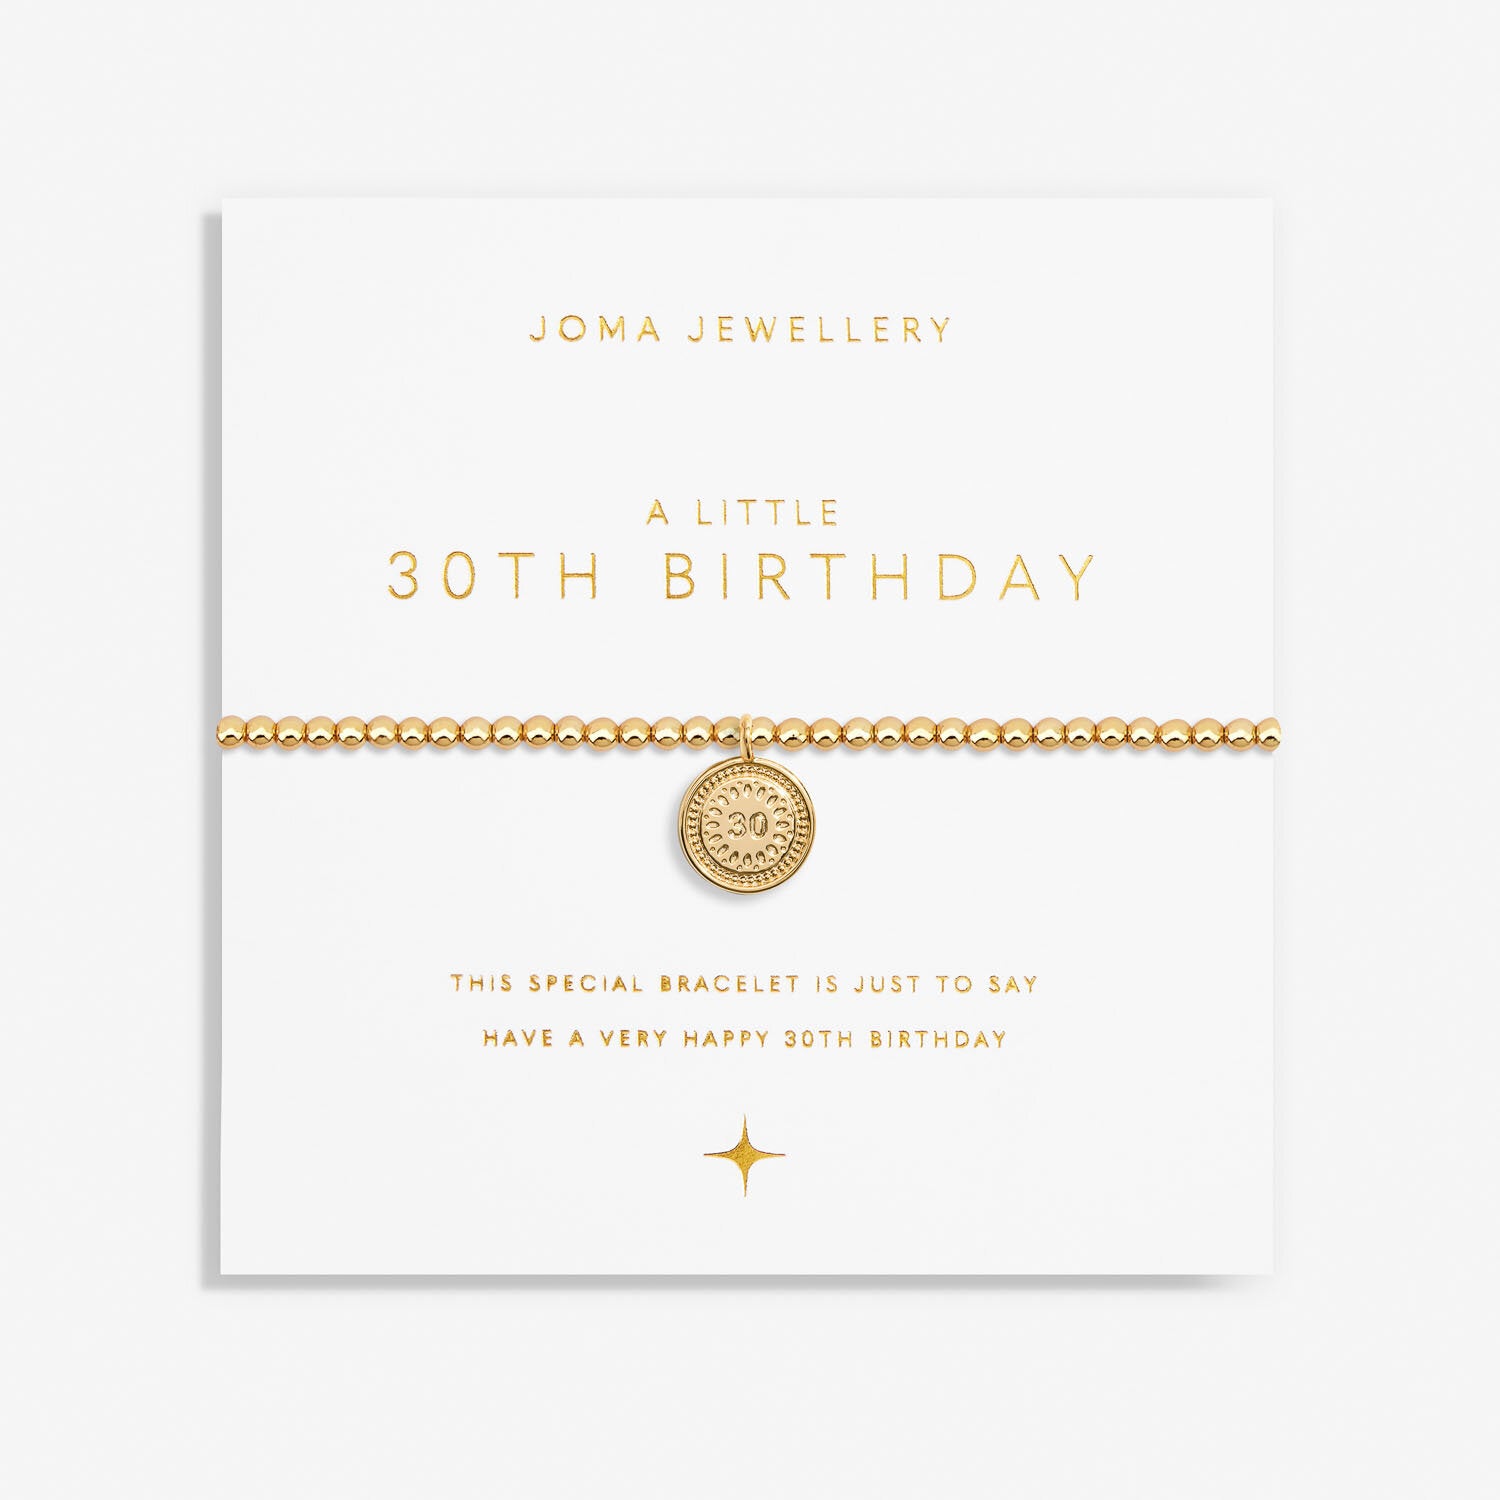 A Little '30th Birthday' Bracelet - Joma Jewellery